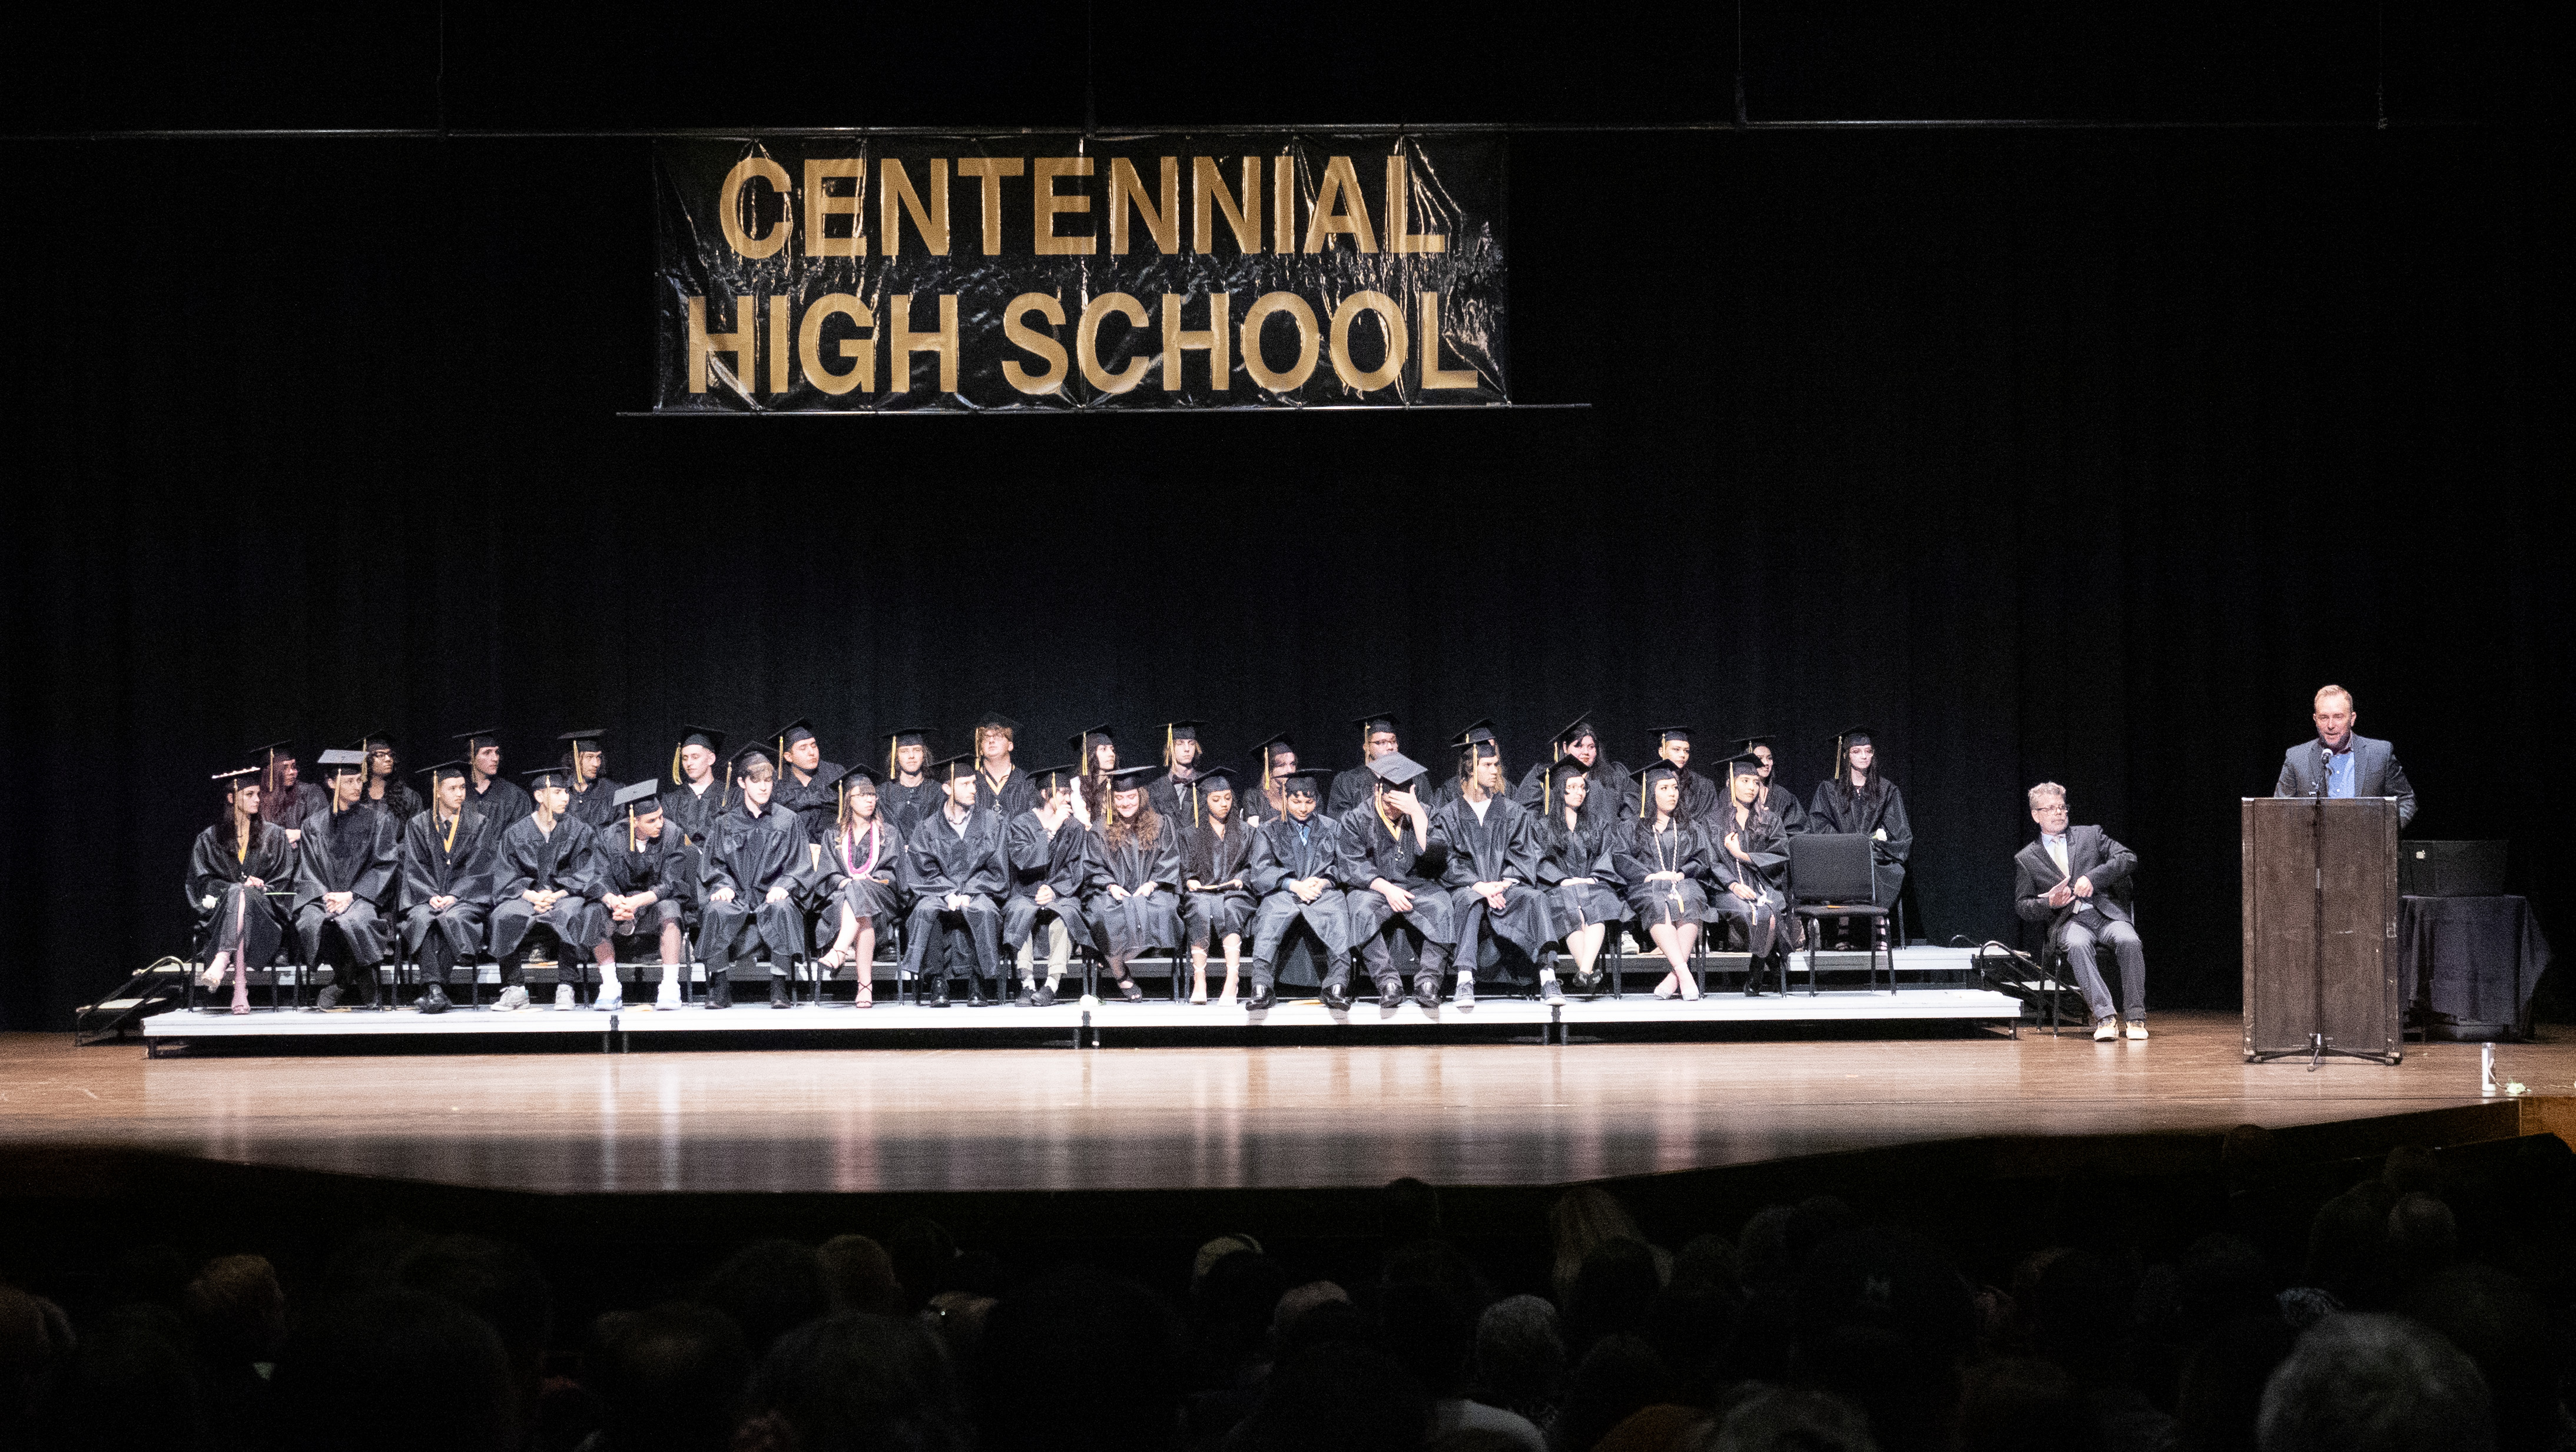 Centennial High School graduates sitting together. 